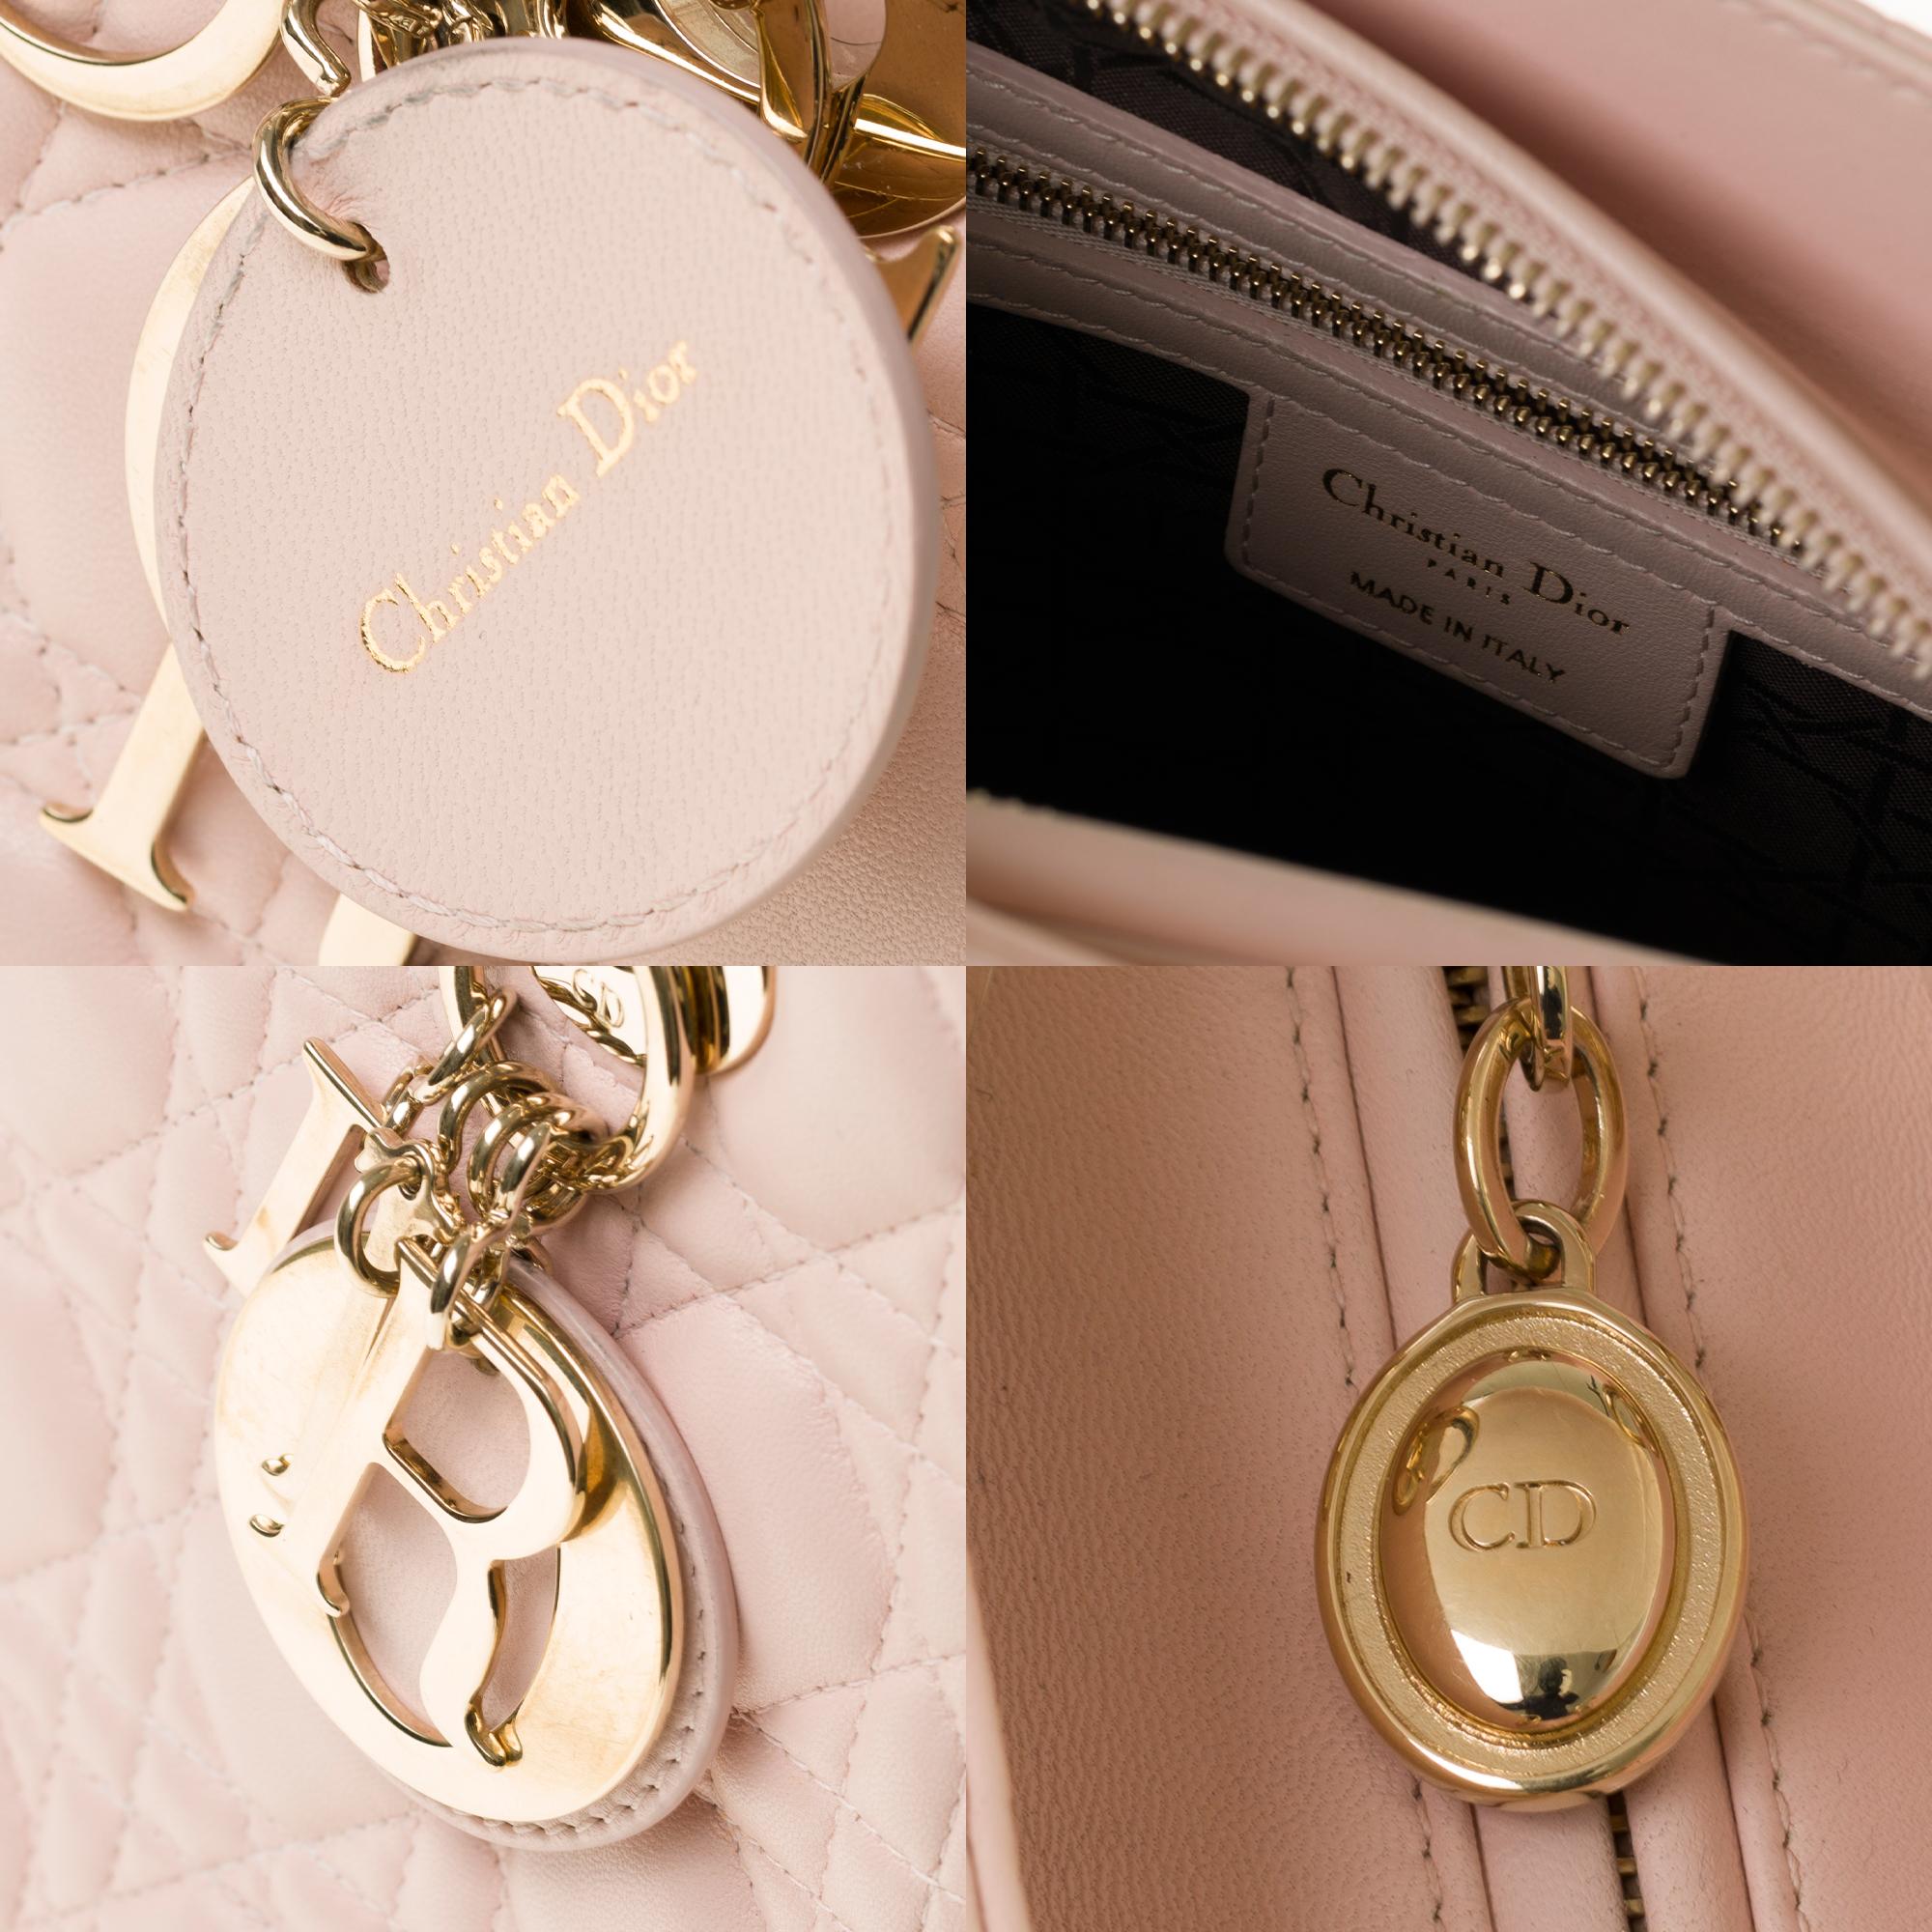 Women's  Christian Dior Lady Dior Medium size handbag in Baby Pink cannage leather, CHW